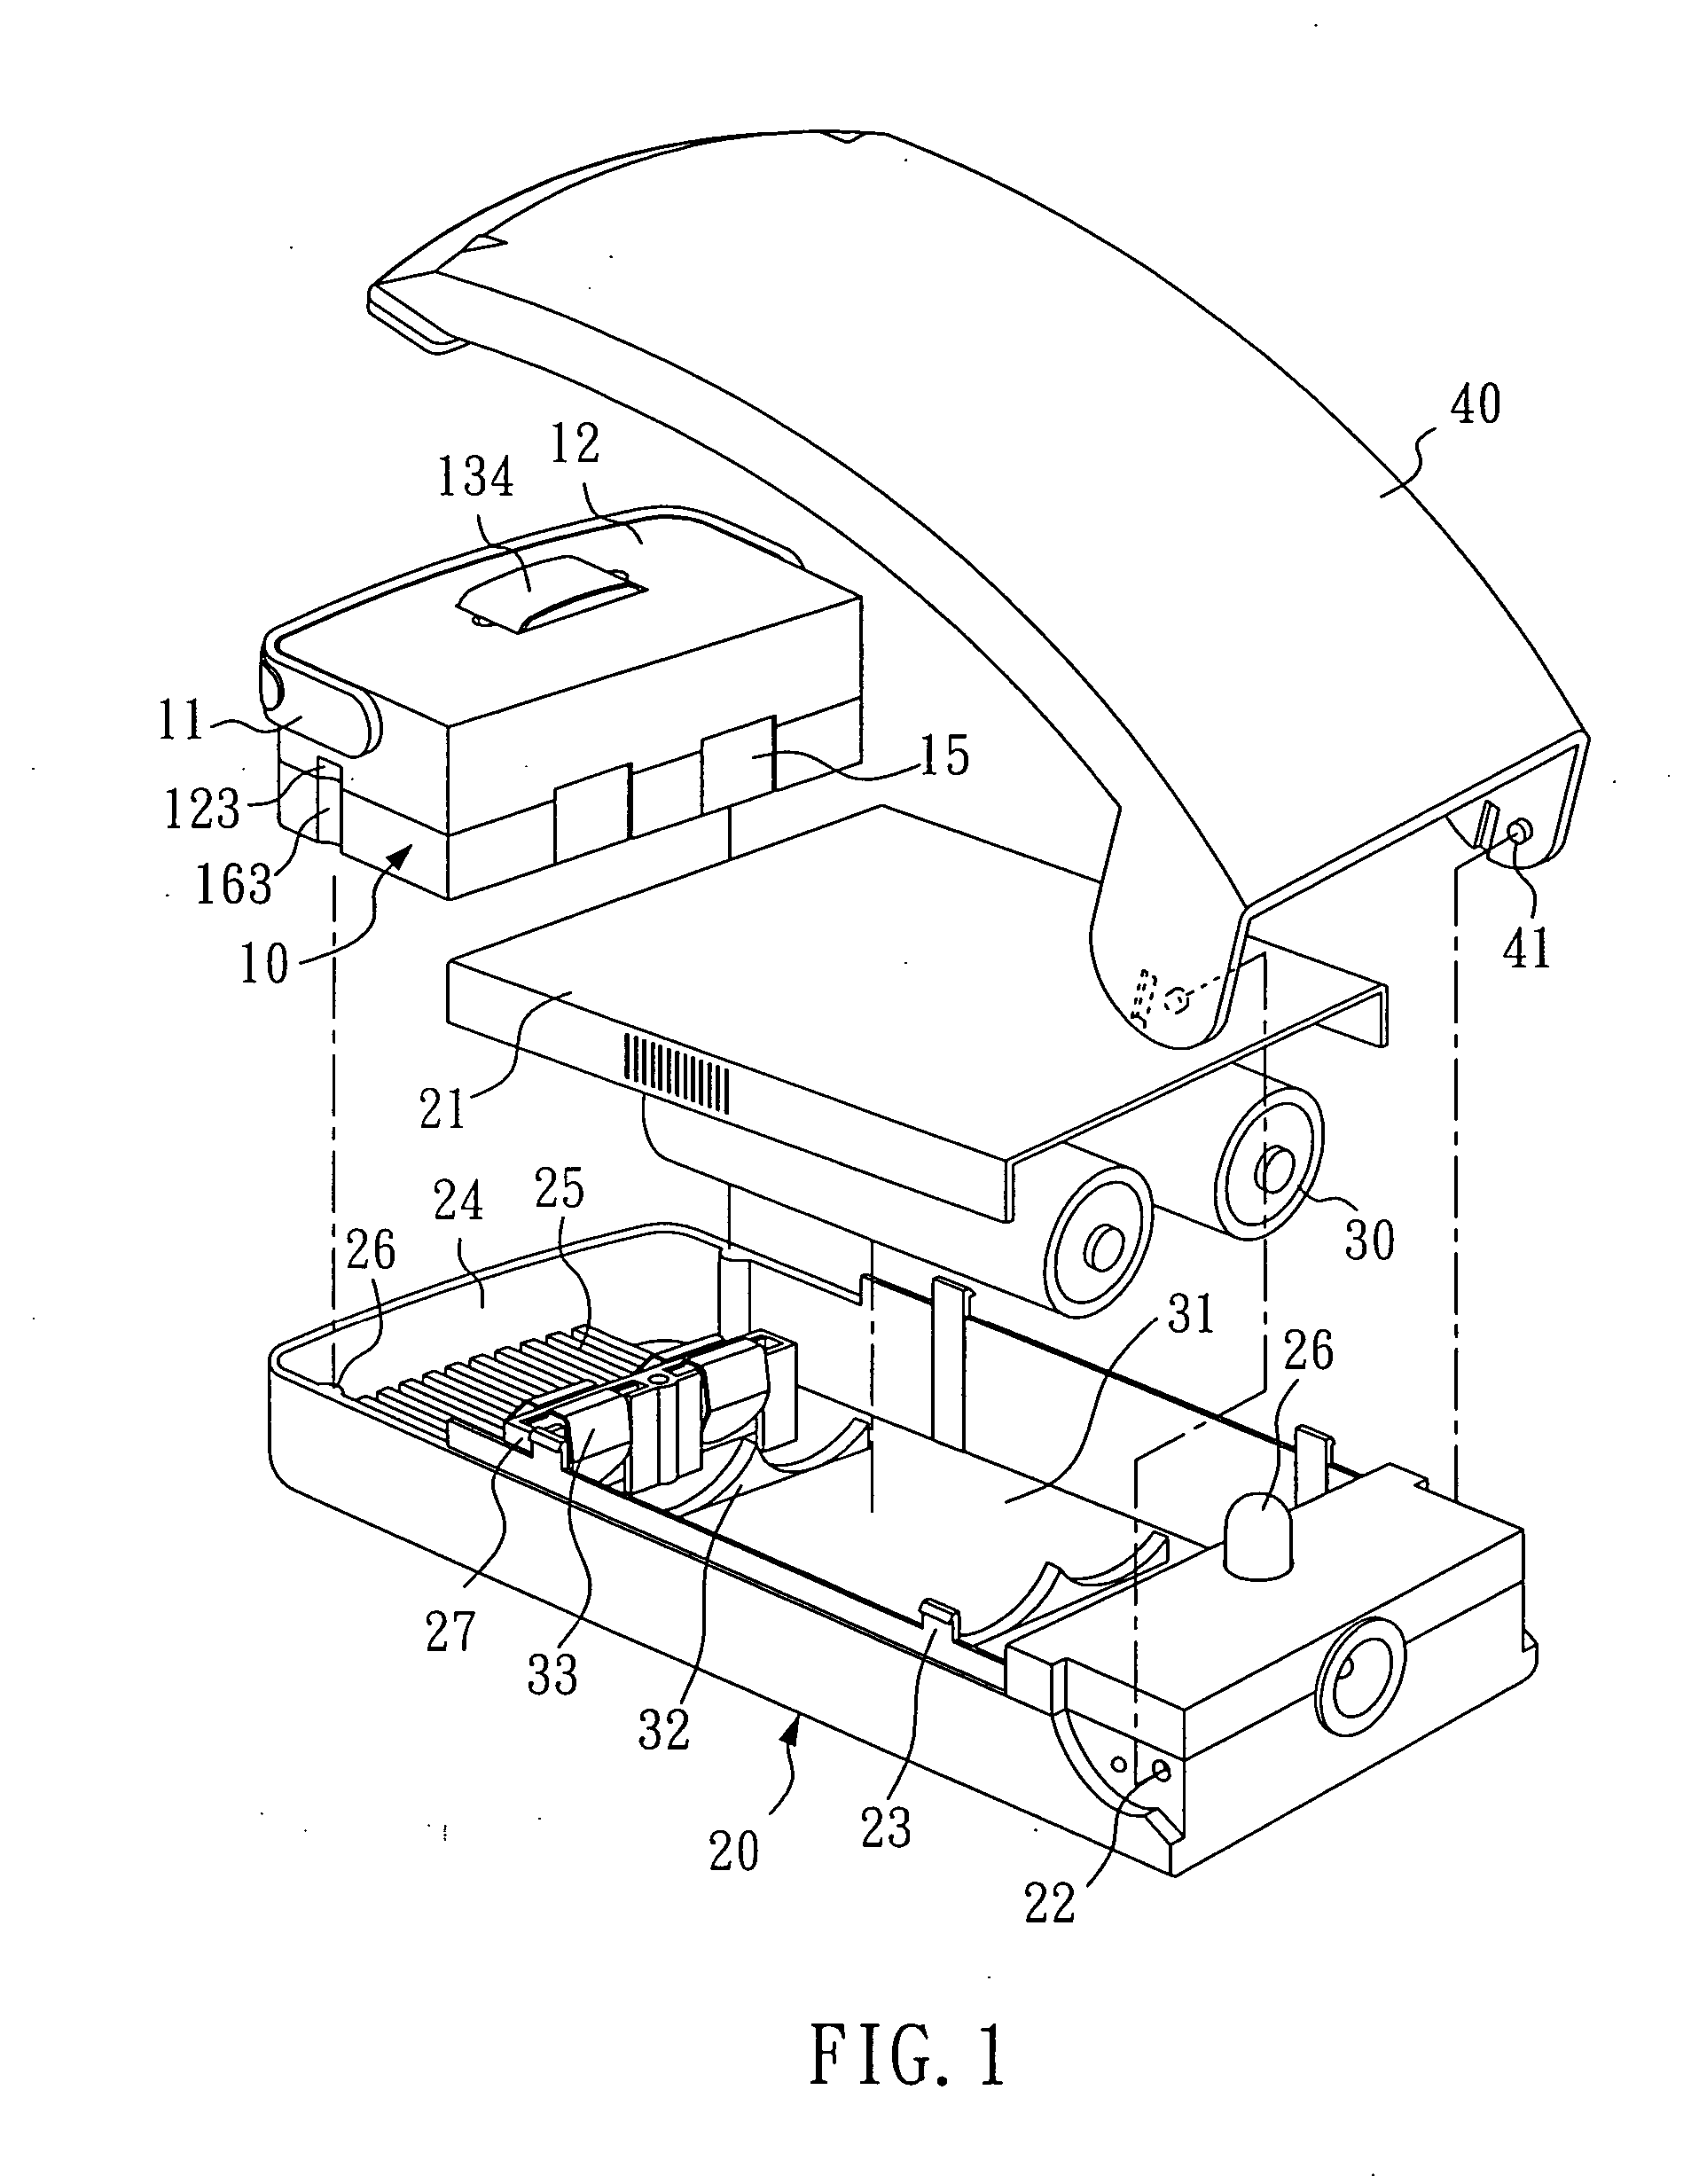 Hand-held electric sealer having a detachable electric sealing module